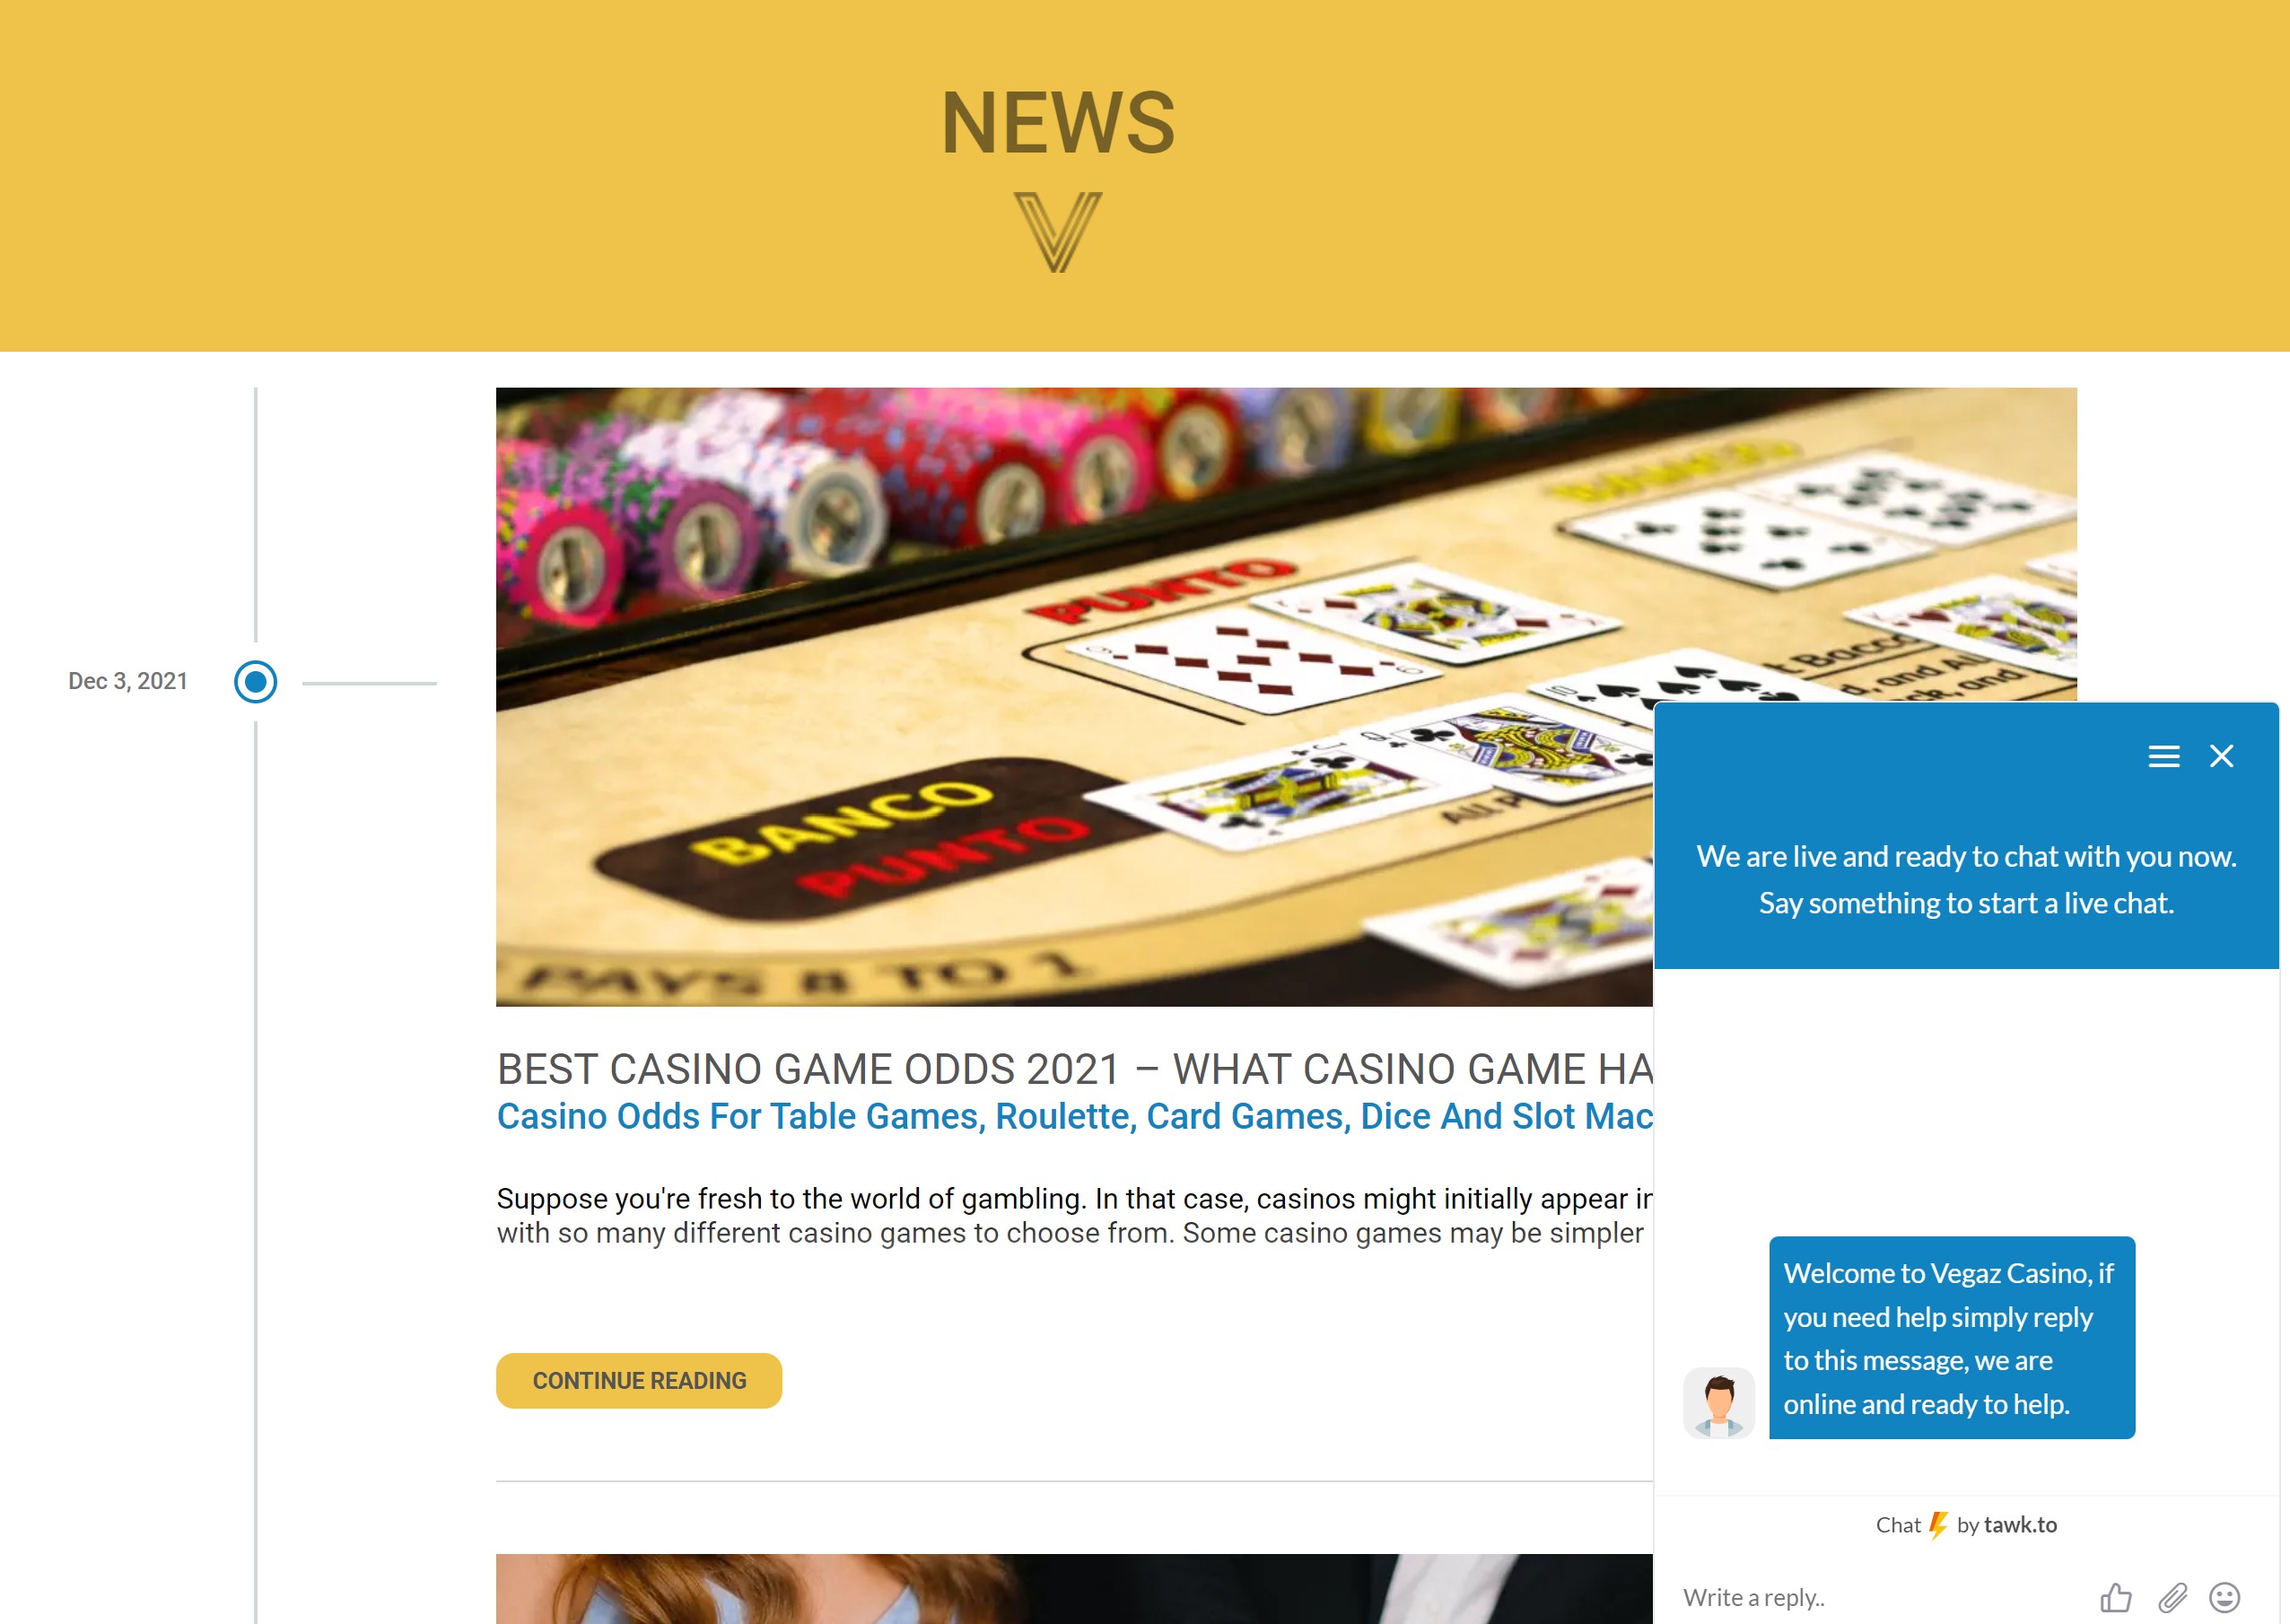 vegaz casino live chat blog customer support best casino game odds